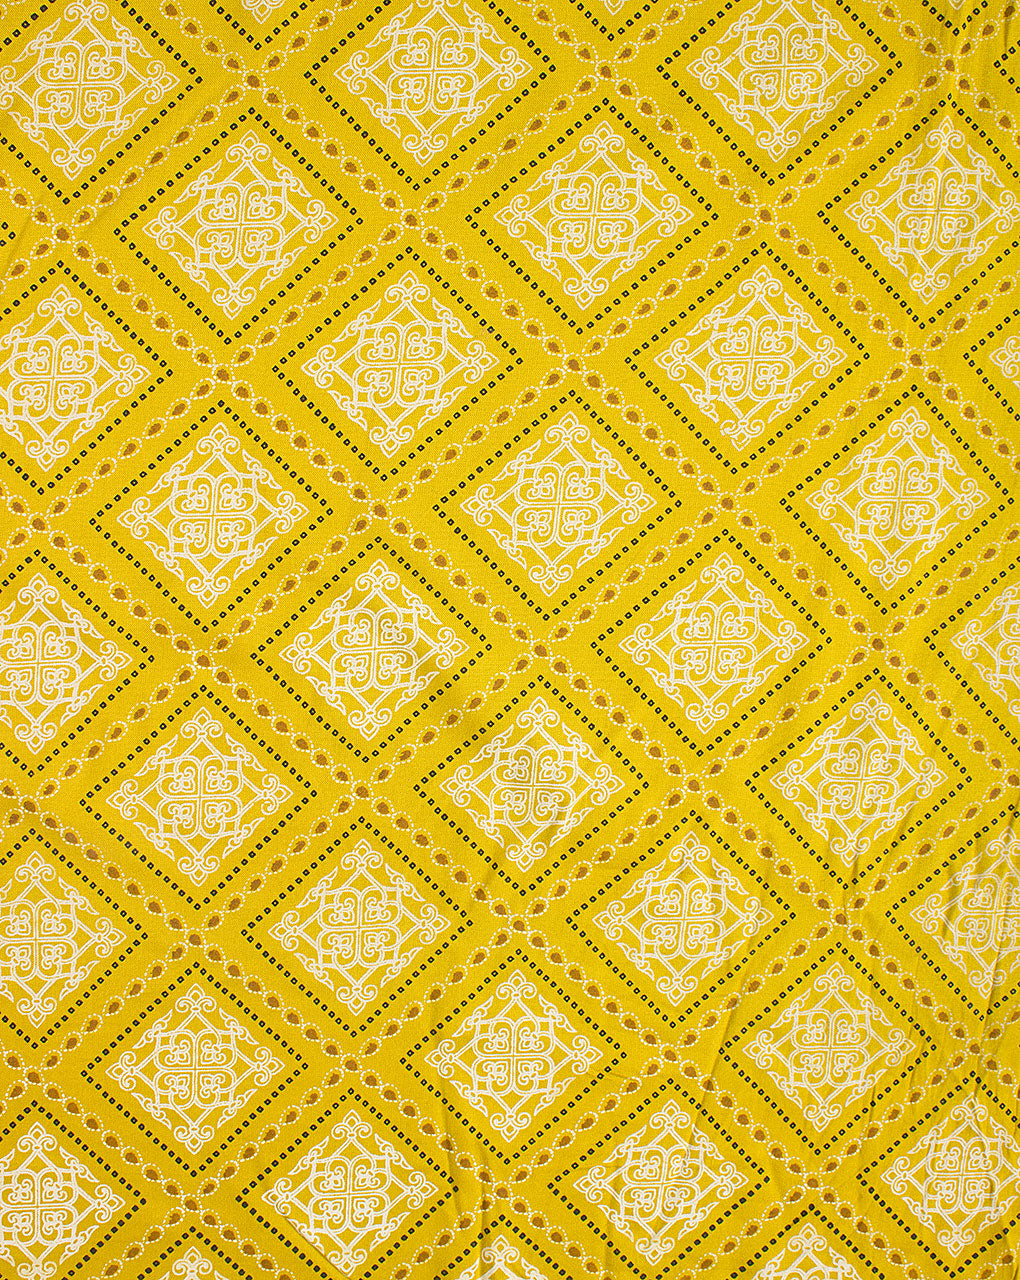 Screen Print Rayon Fabric - Fabriclore.com